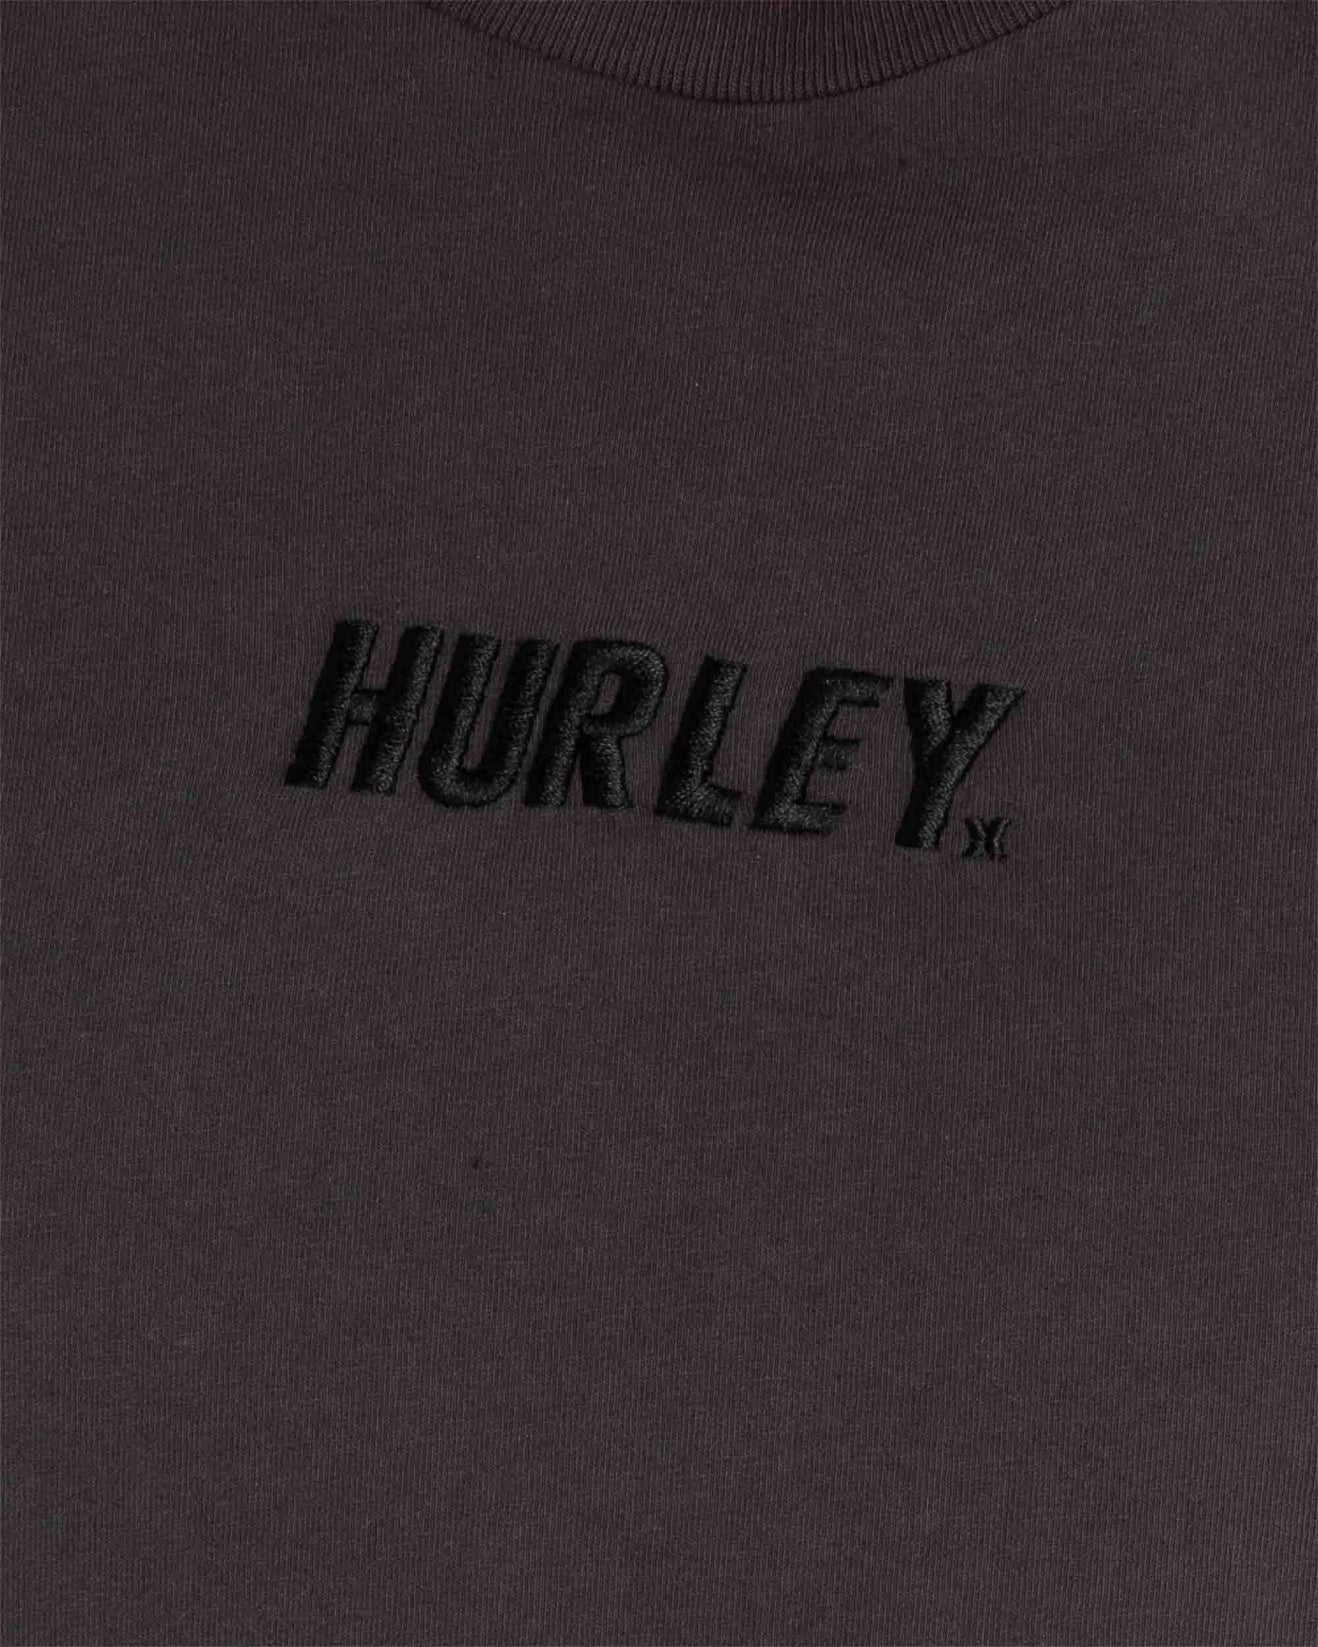 Hurley Fastlane Tee